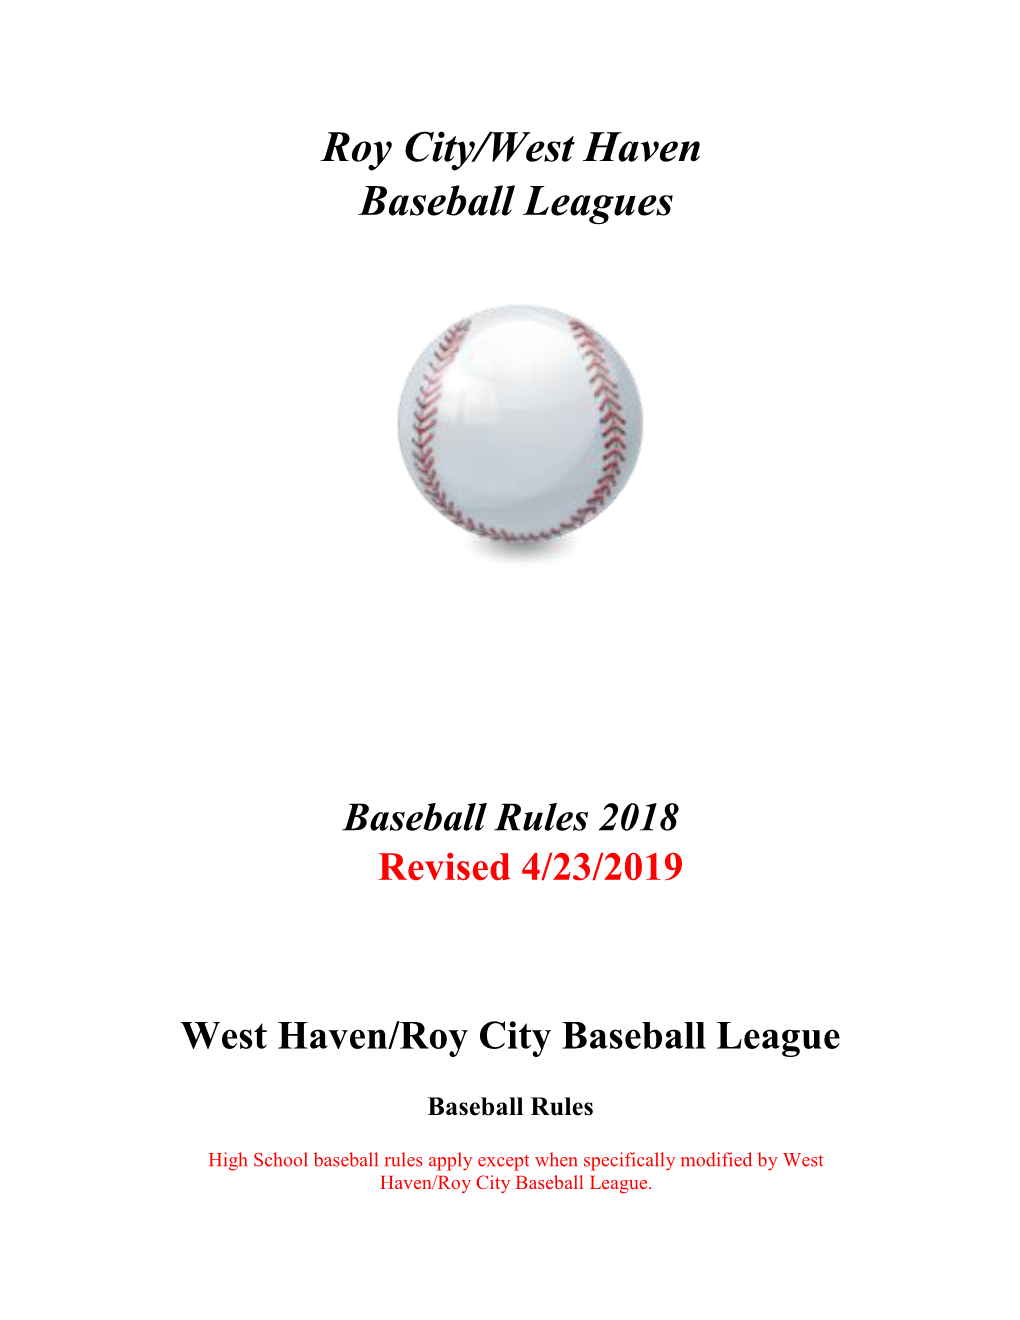 Baseball Rules 2018